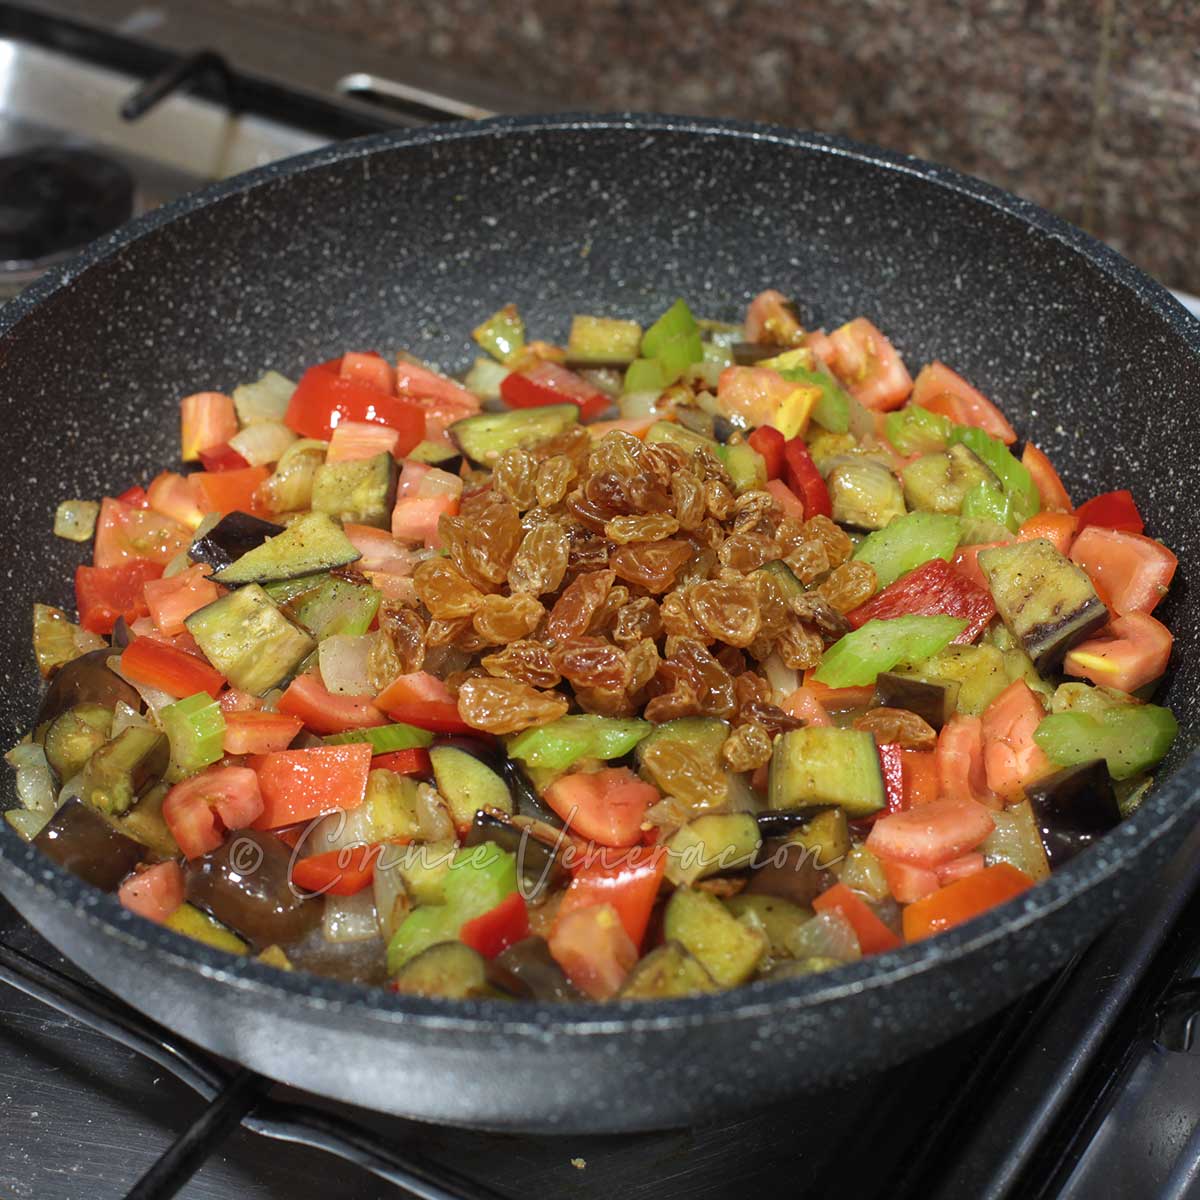 Adding vinegar and raisins to vegetables in pan to make caponata